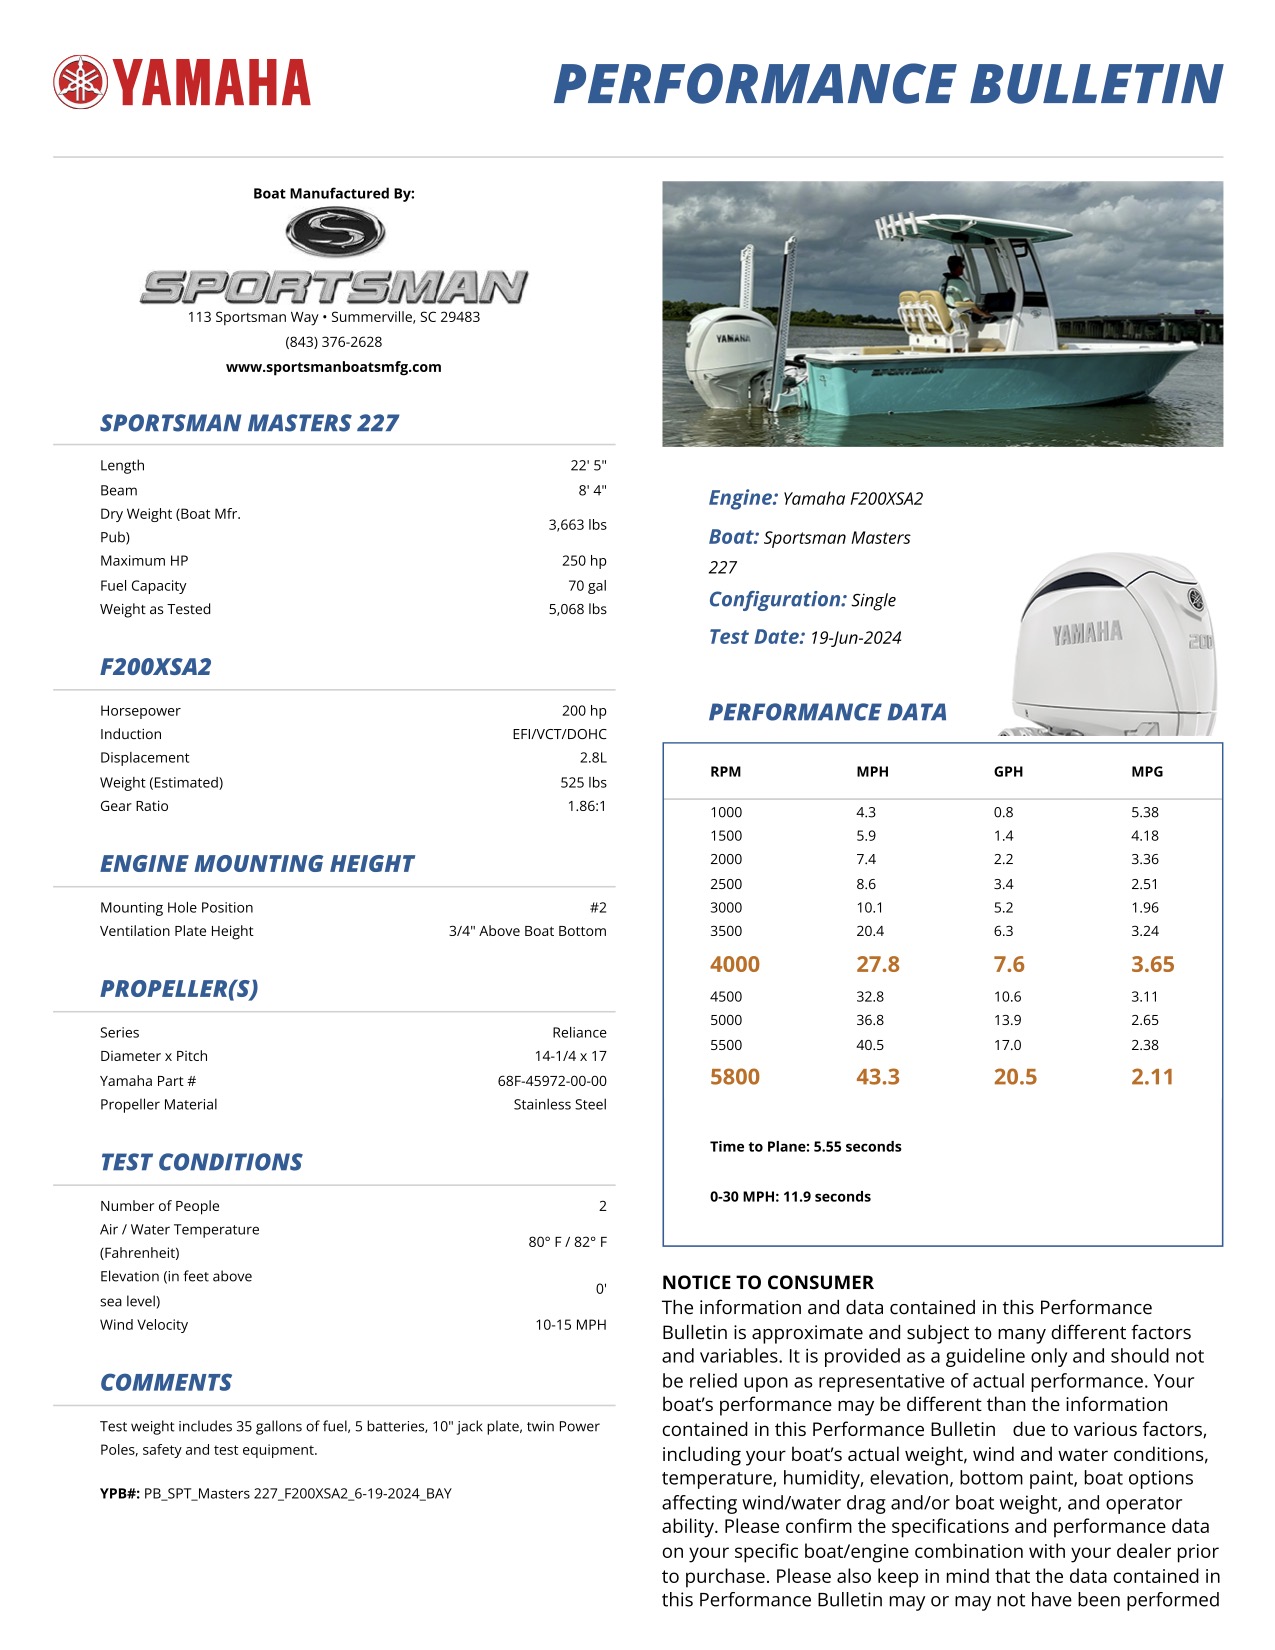 Performance bulletin for 227-bay-boat